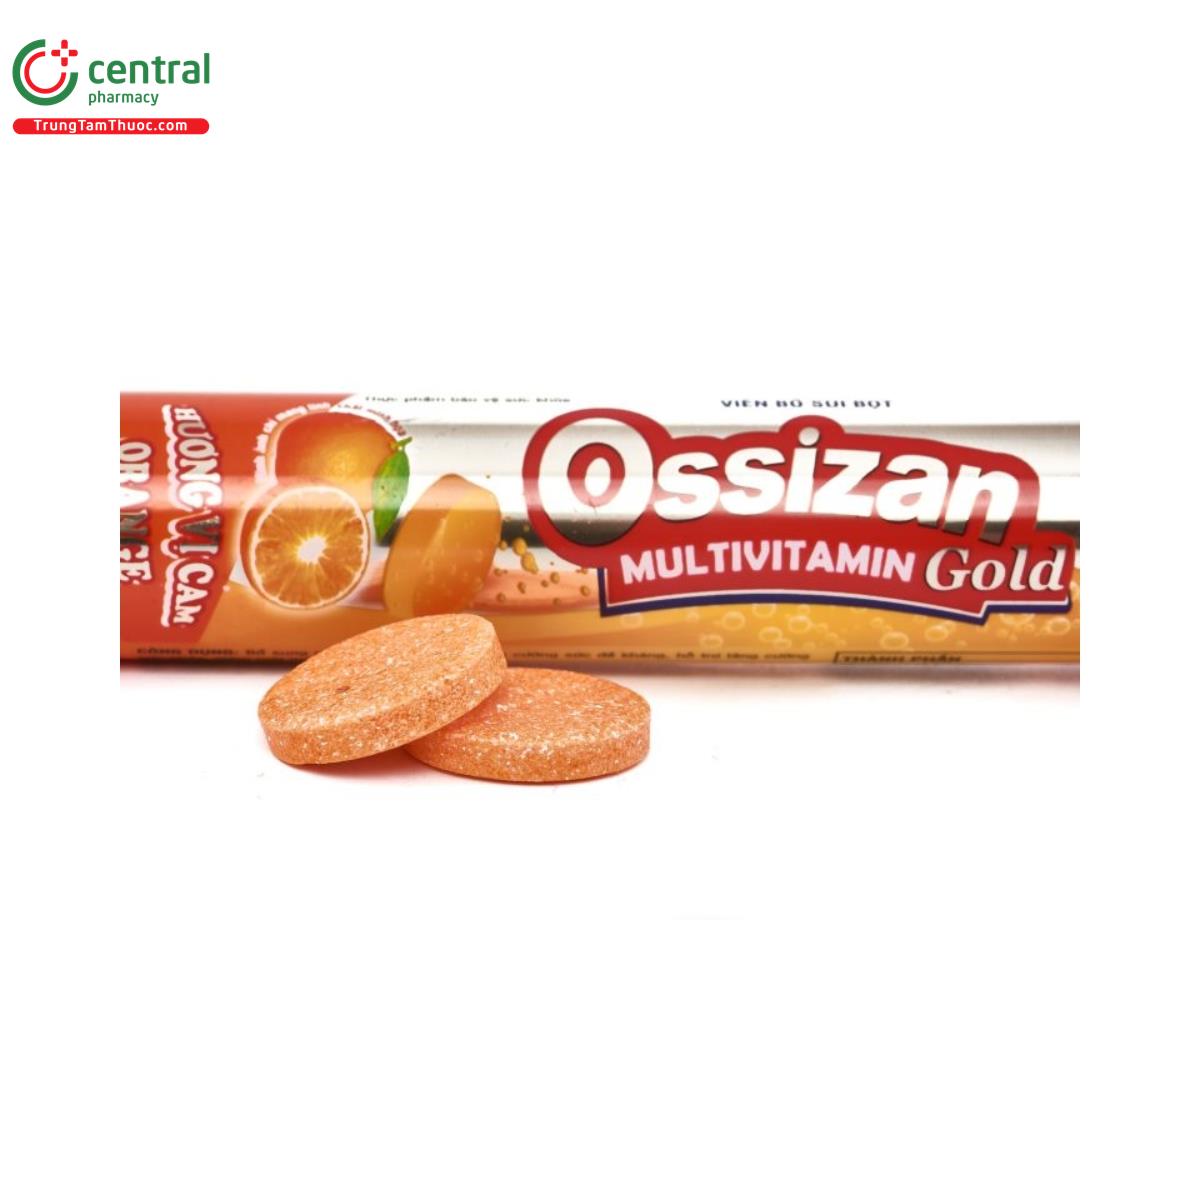 ossizan multivitamin gold 9 I3812